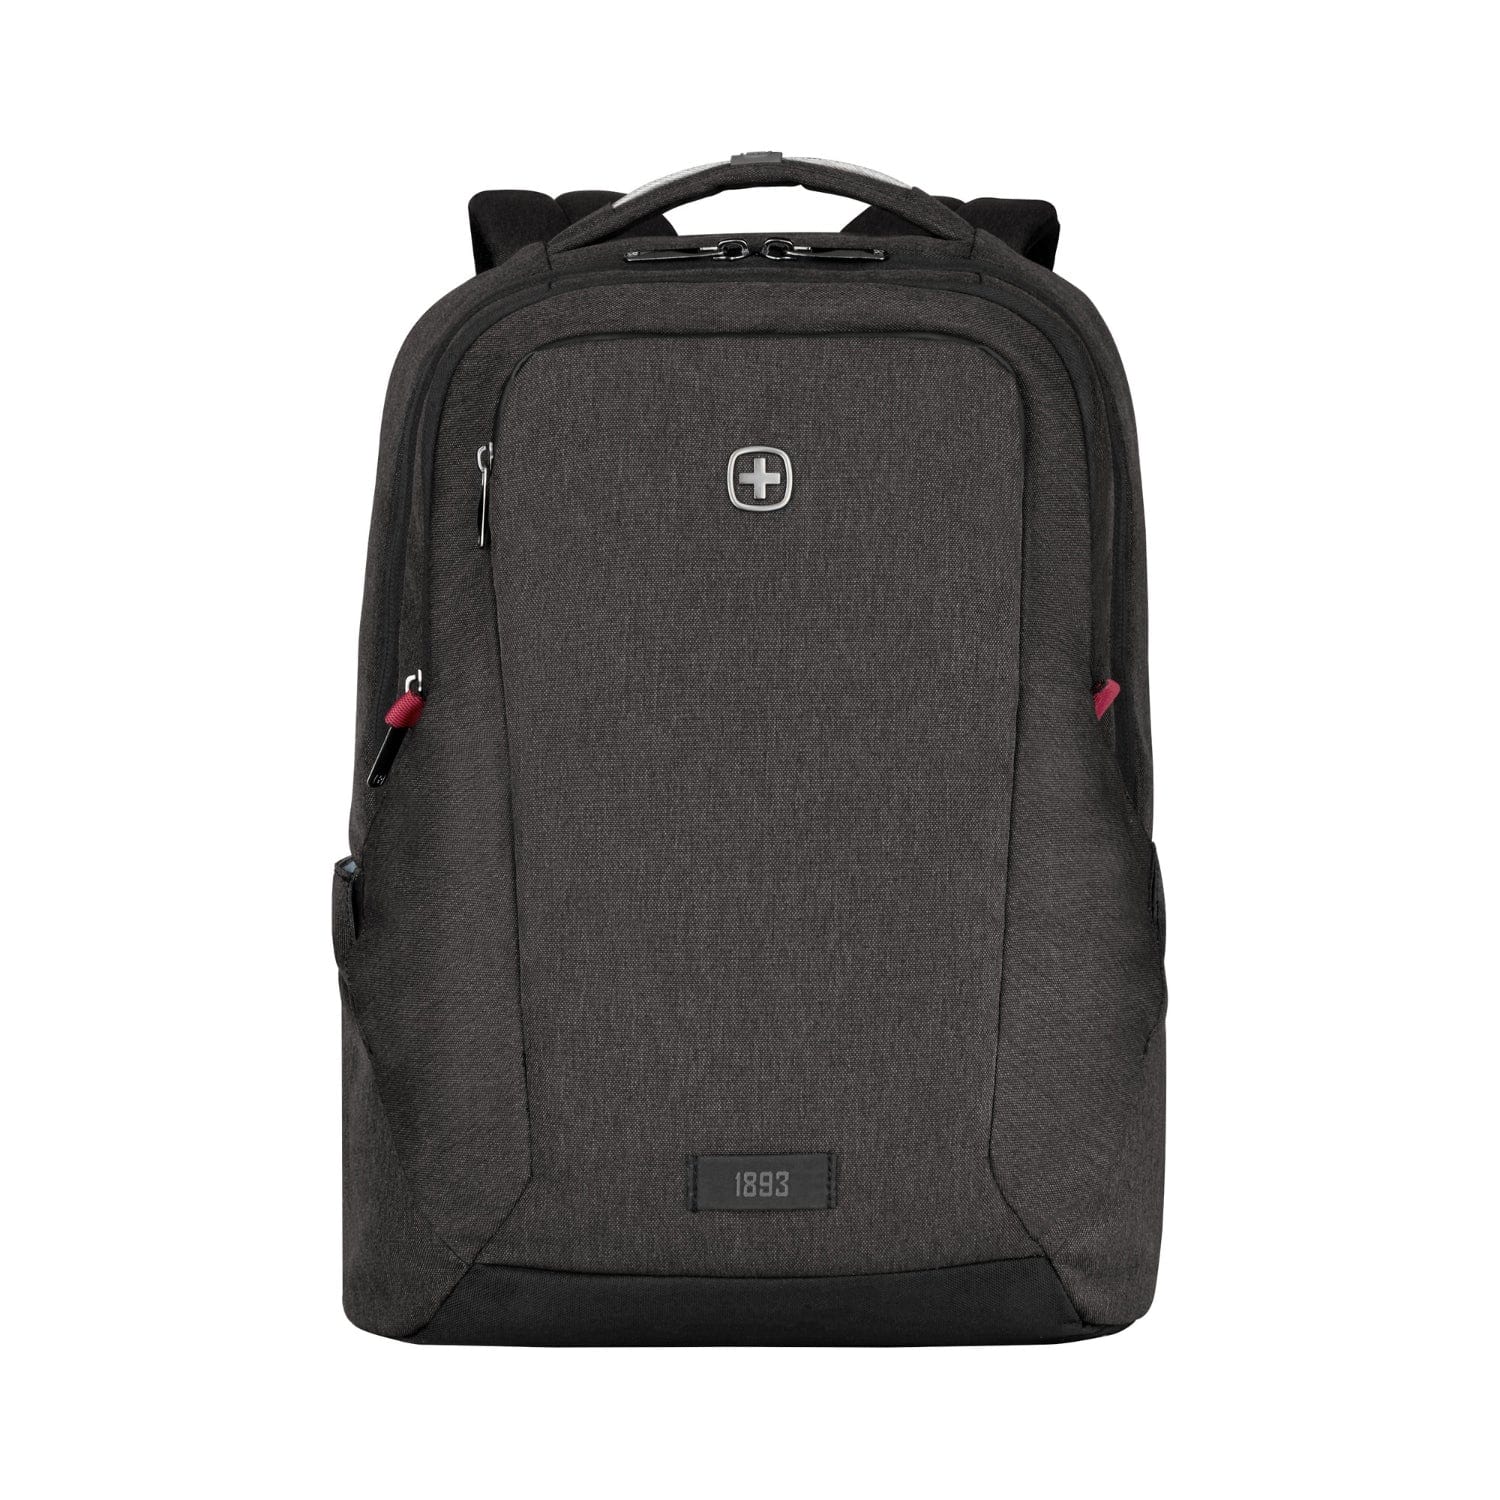 Wenger Mx Professional 16" Laptop Backpack with Tablet Pocket Grey - 611641